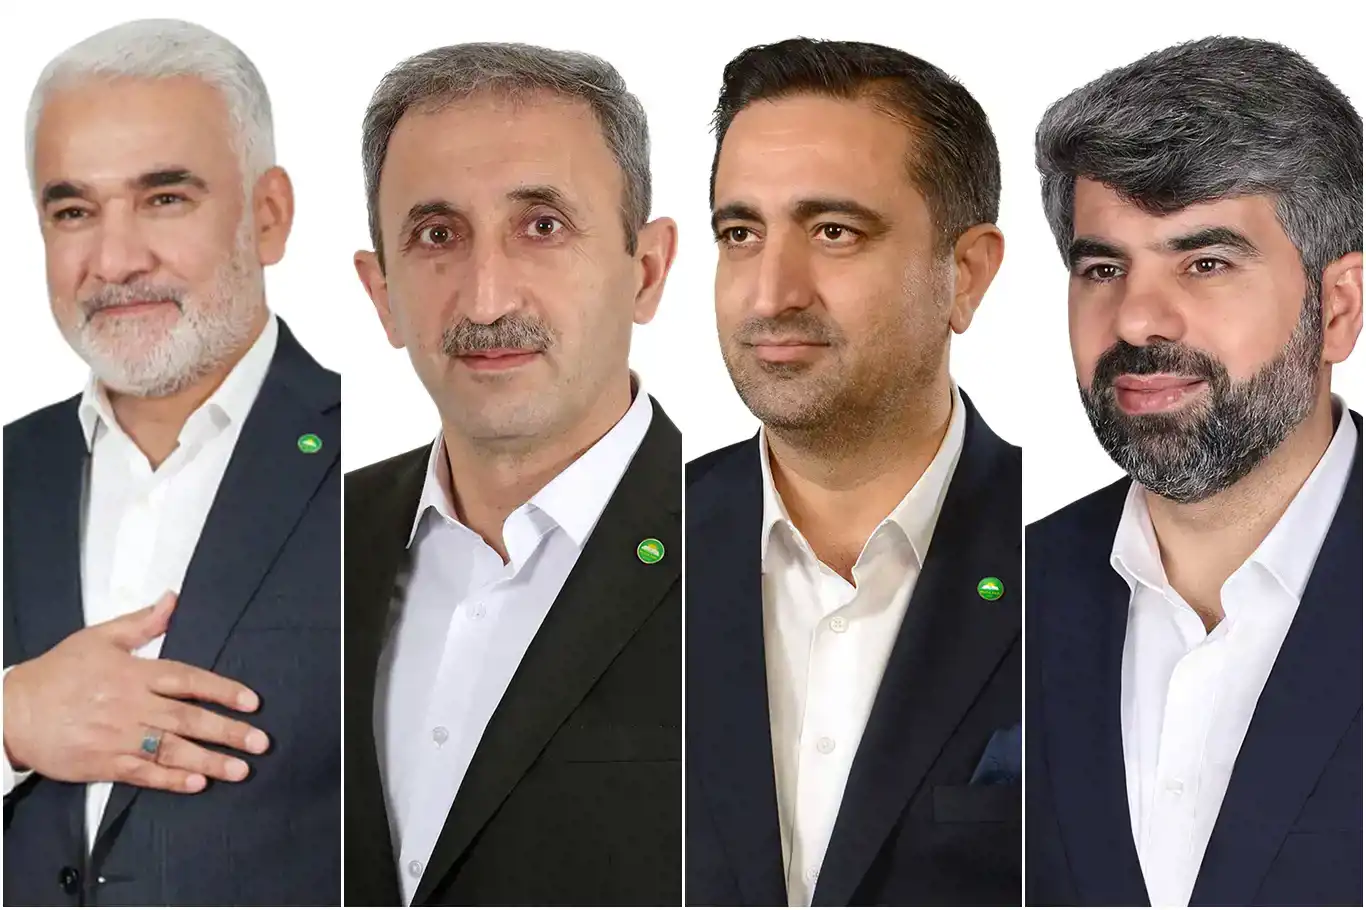 HÜDA PAR secures four parliamentary seats